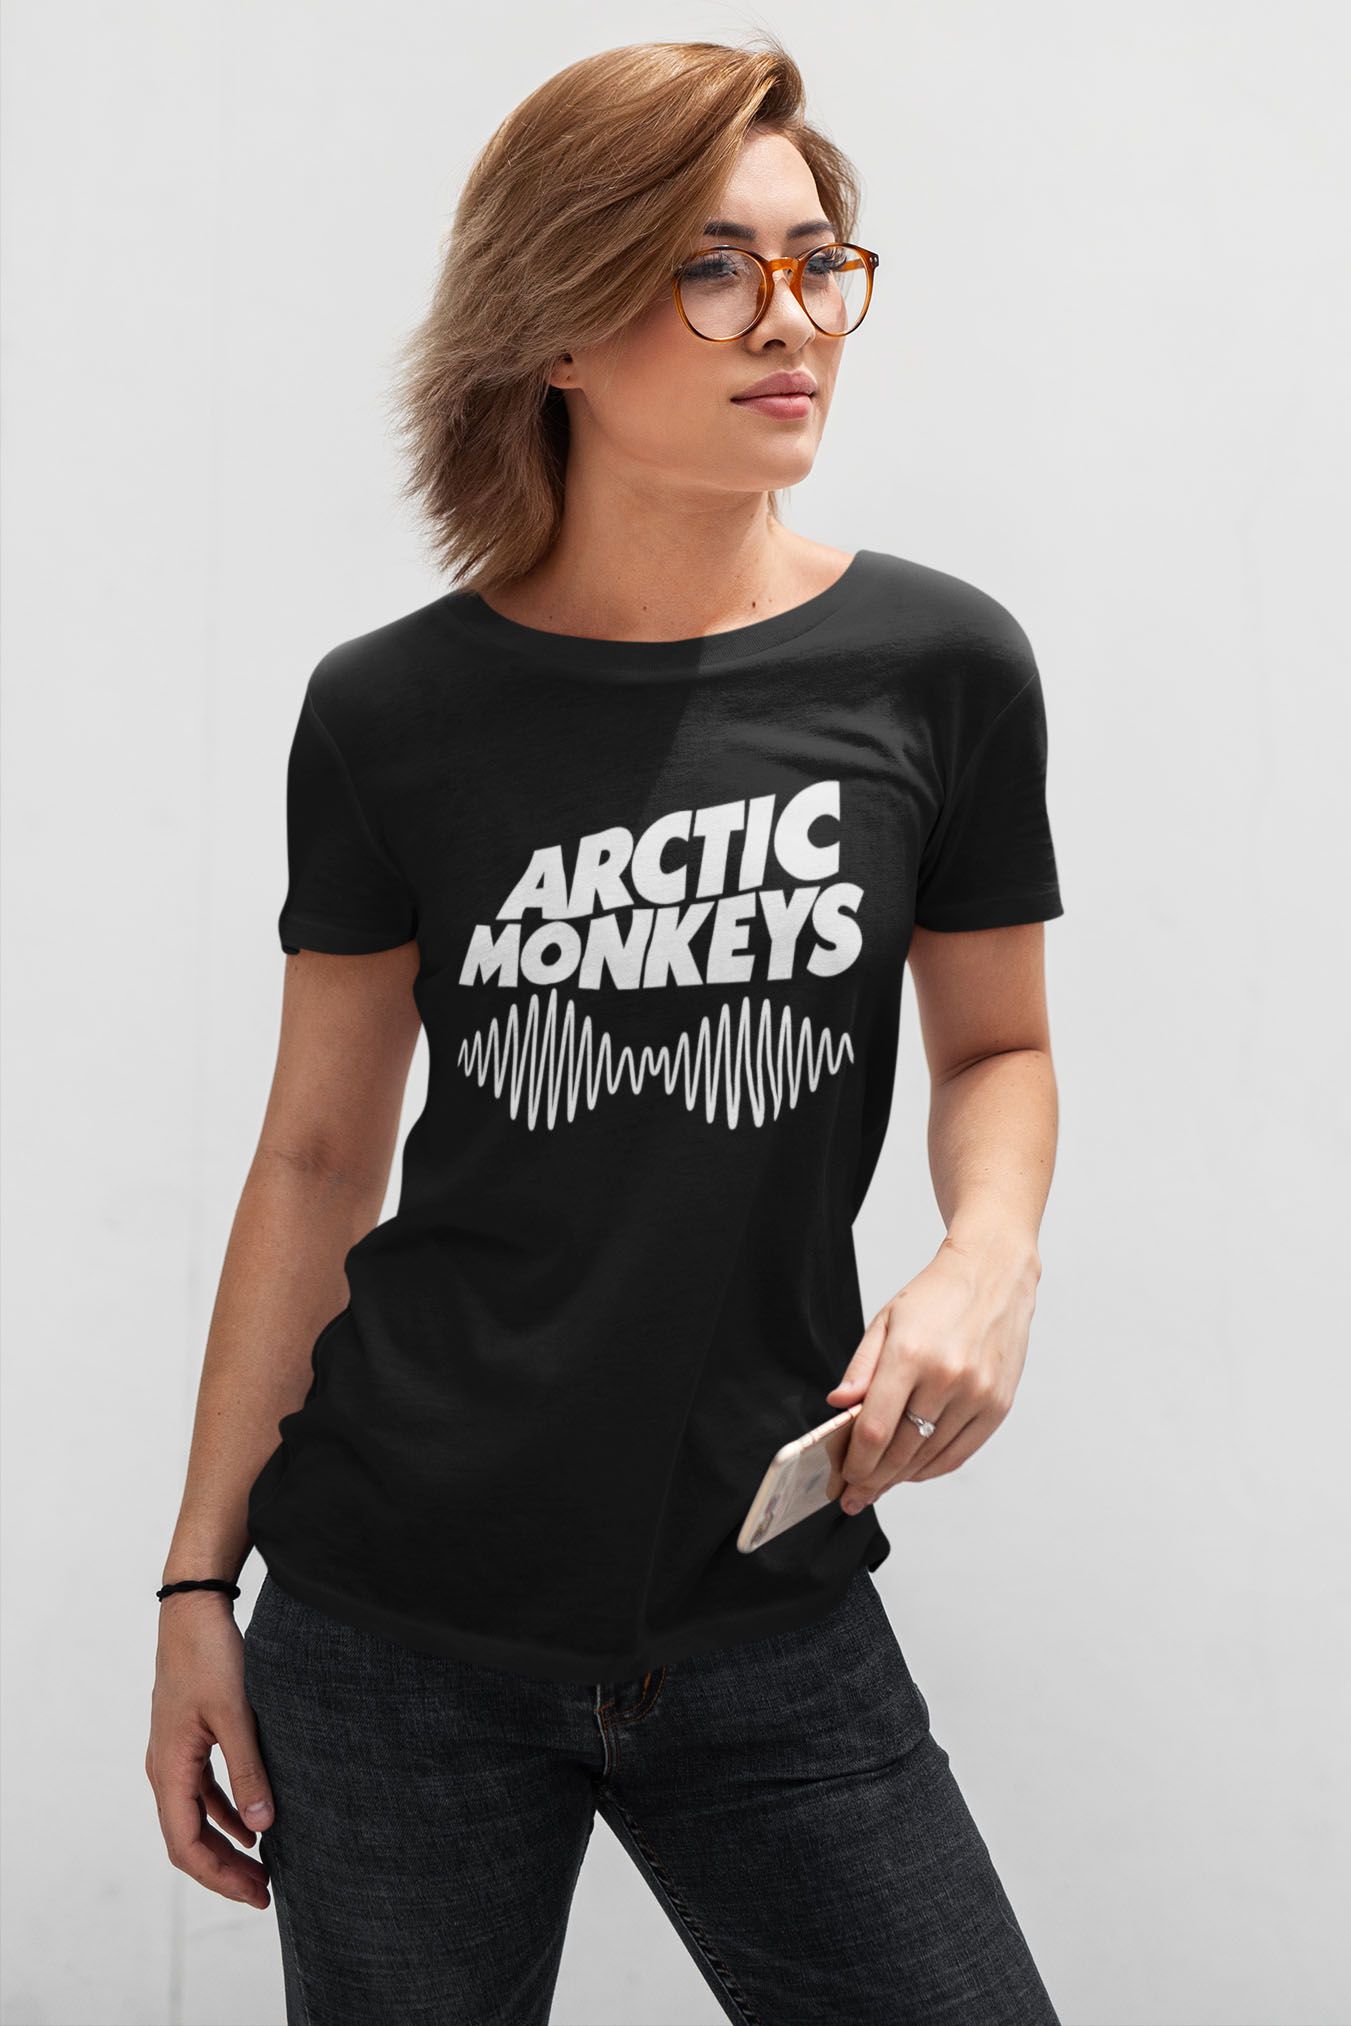 Camisa Arctic Monkeys - Loja FETH - Camisetas e Croppeds com estilo,  diretas e minimalistas